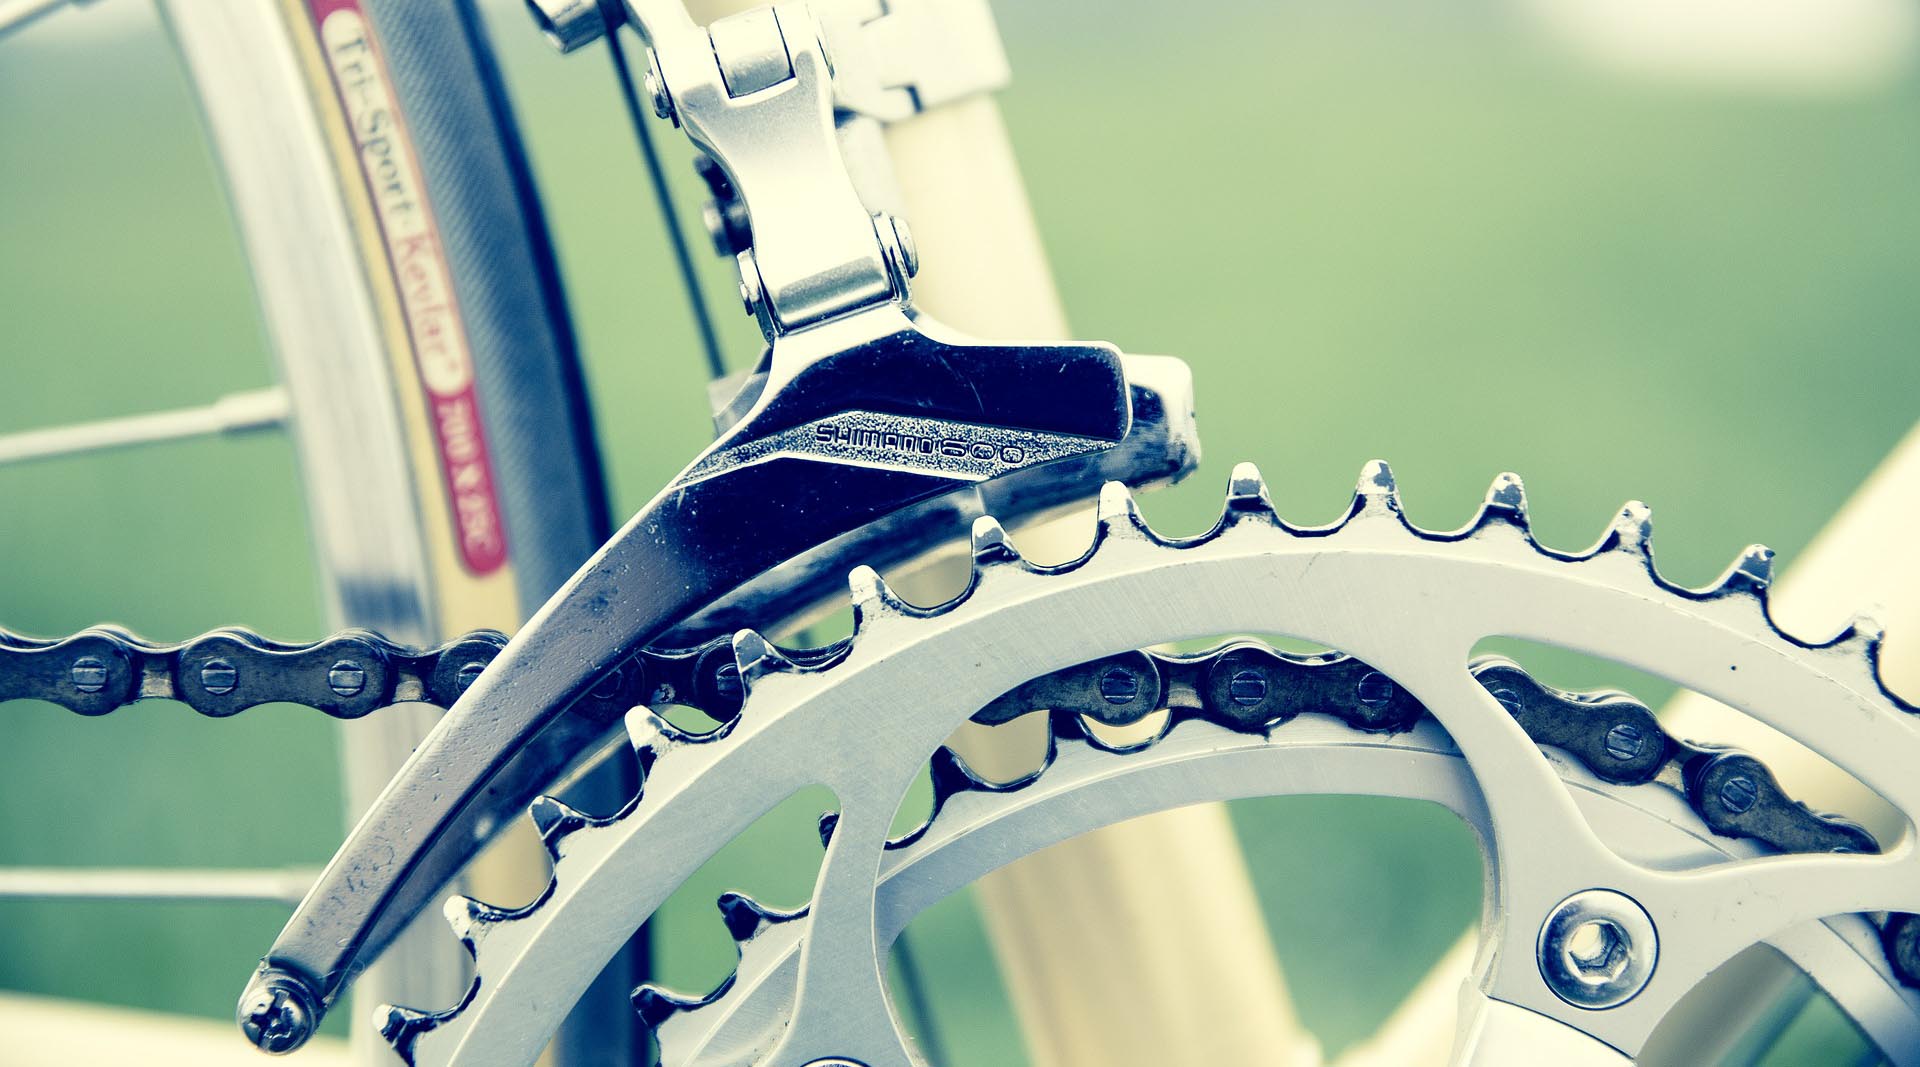 Bike Maintenance advice and Core fitness for cycling, bike blitz training program